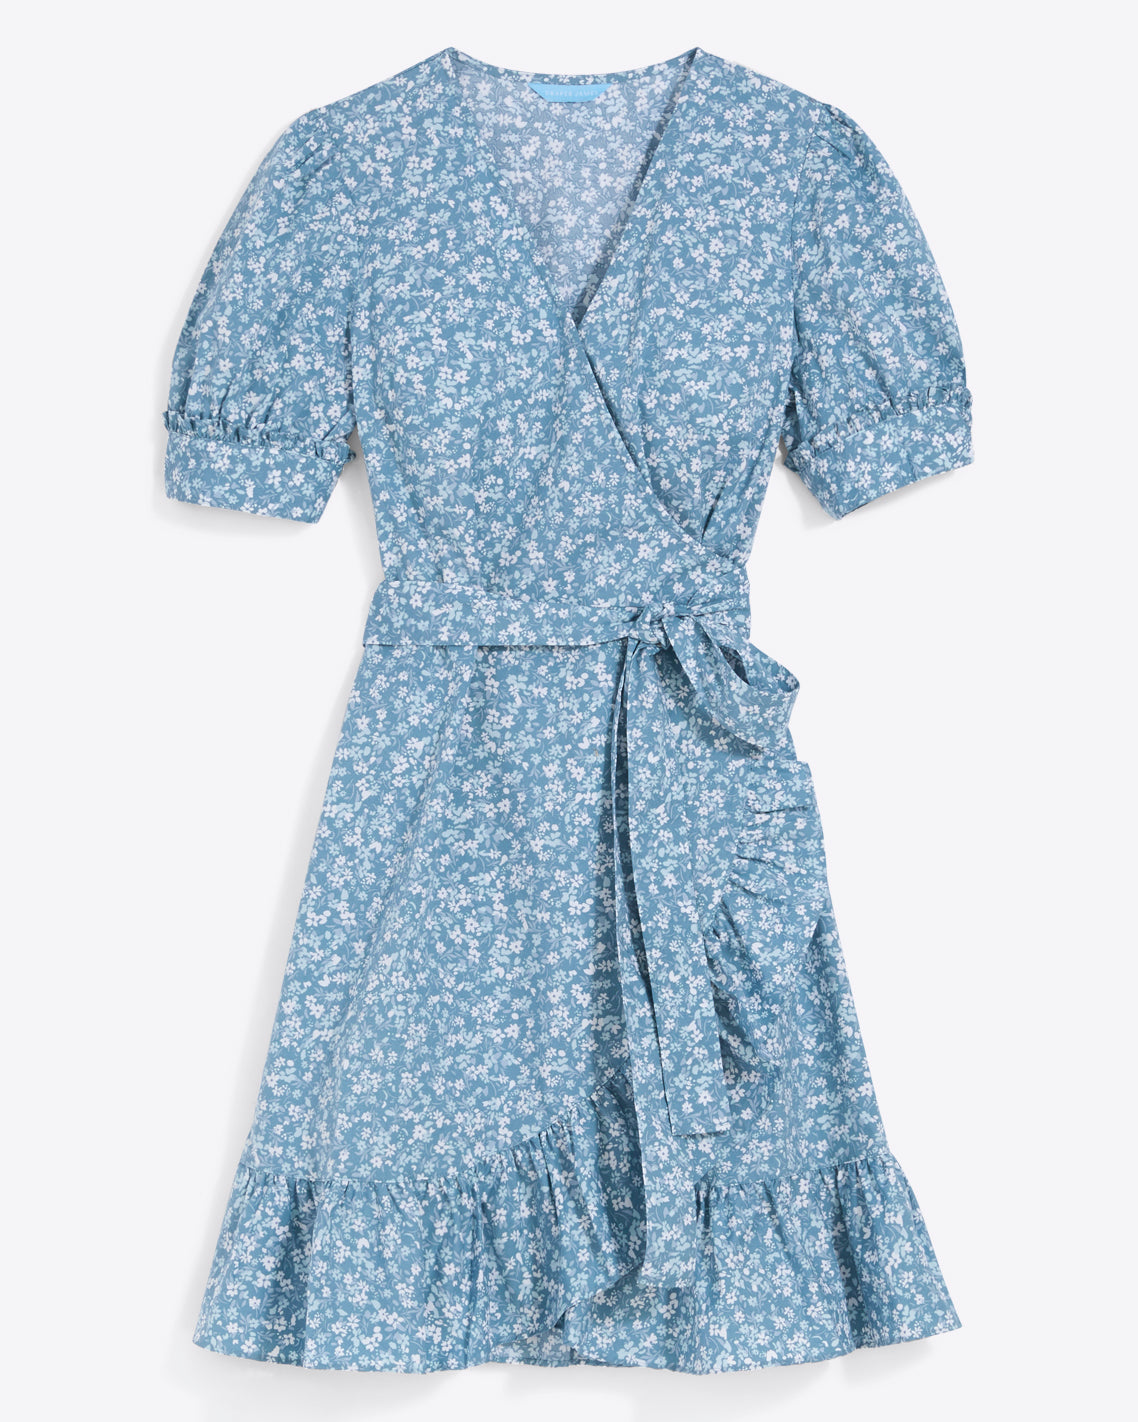 Reba Wrap Dress in Bluebell Floral